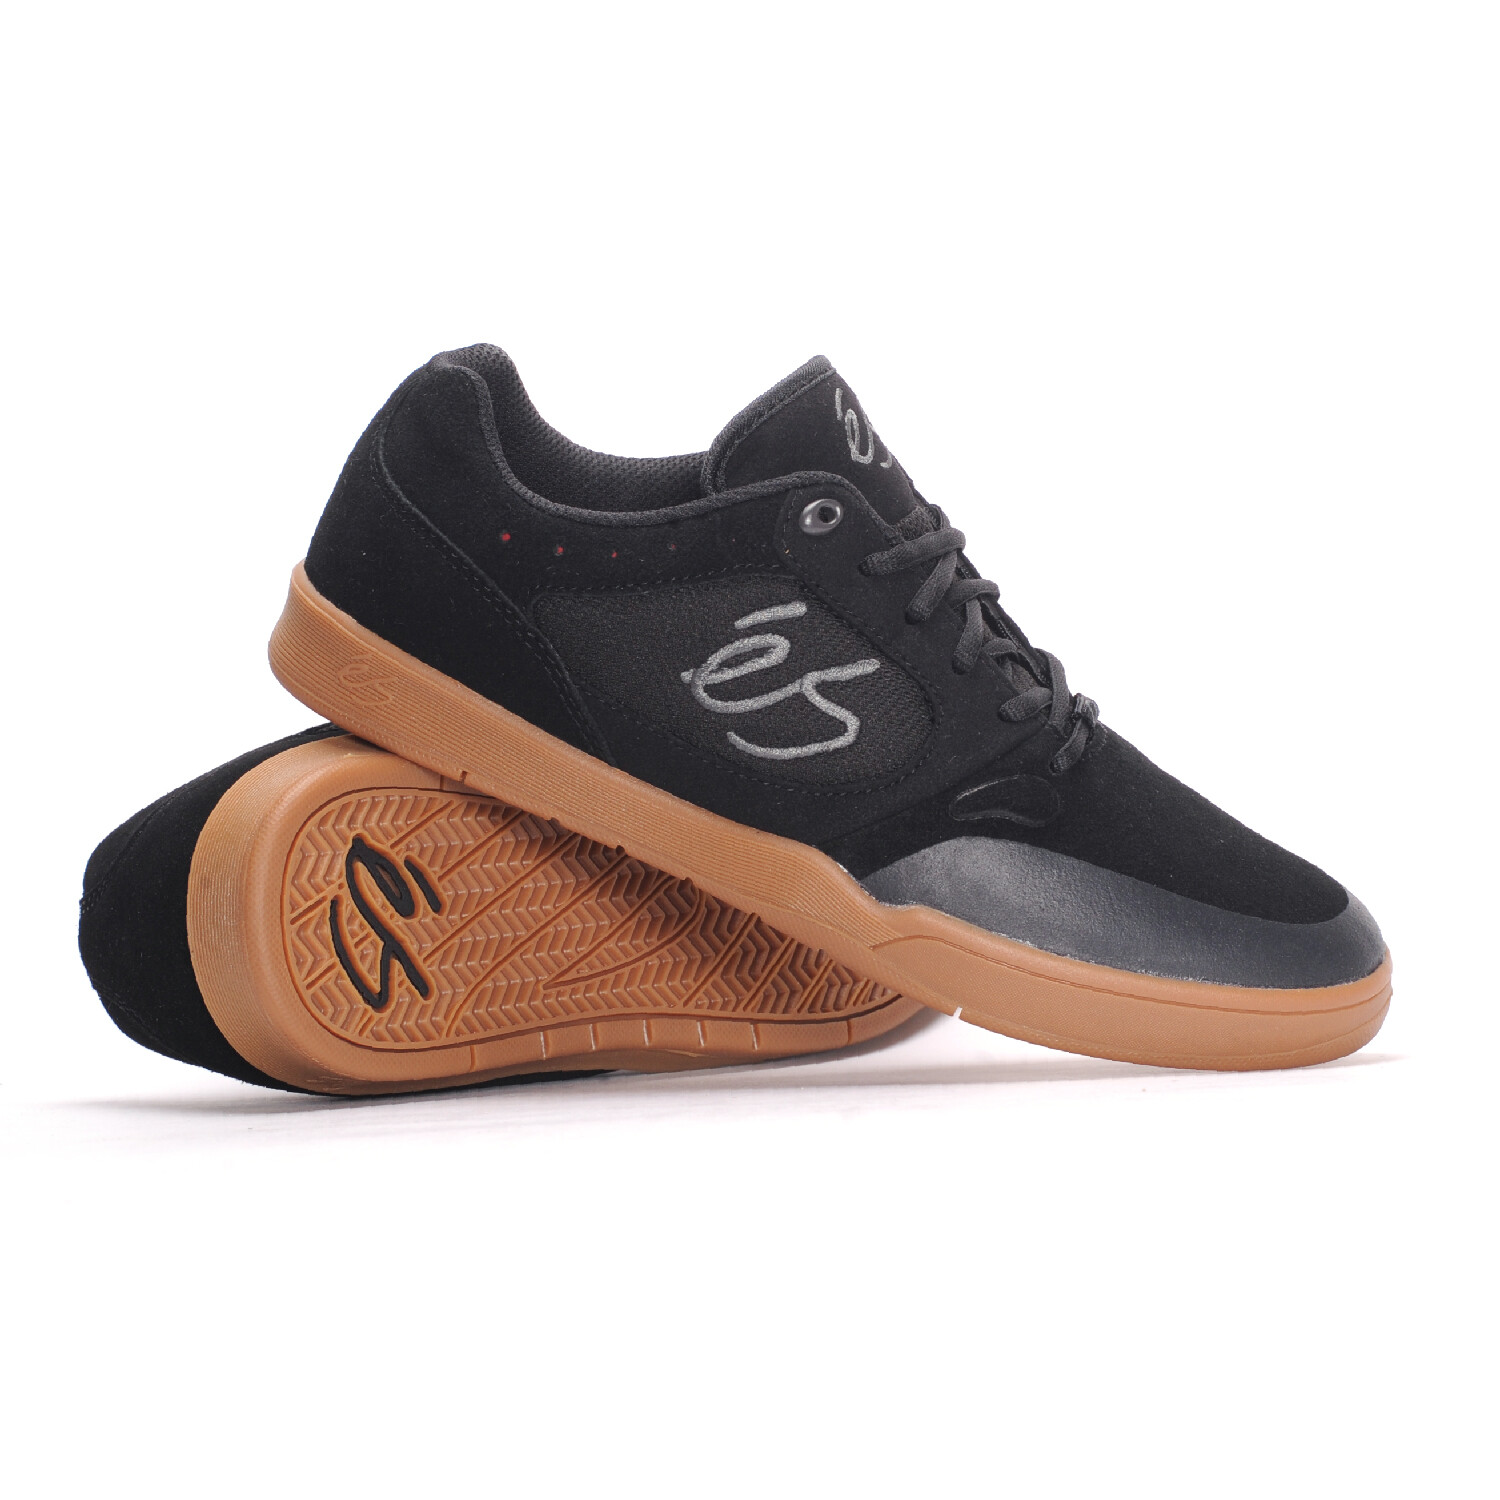 éS Swift 1.5 schoenen black / gum